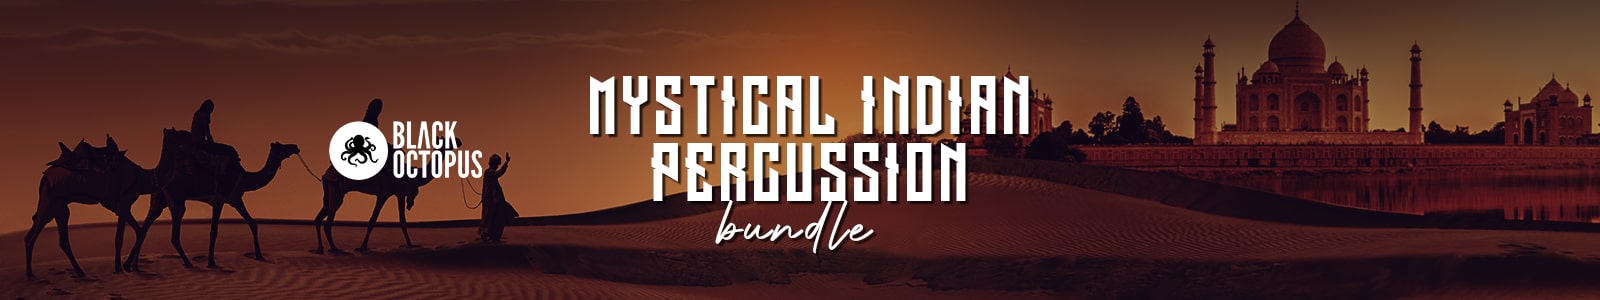 mystical indian percussion bundle